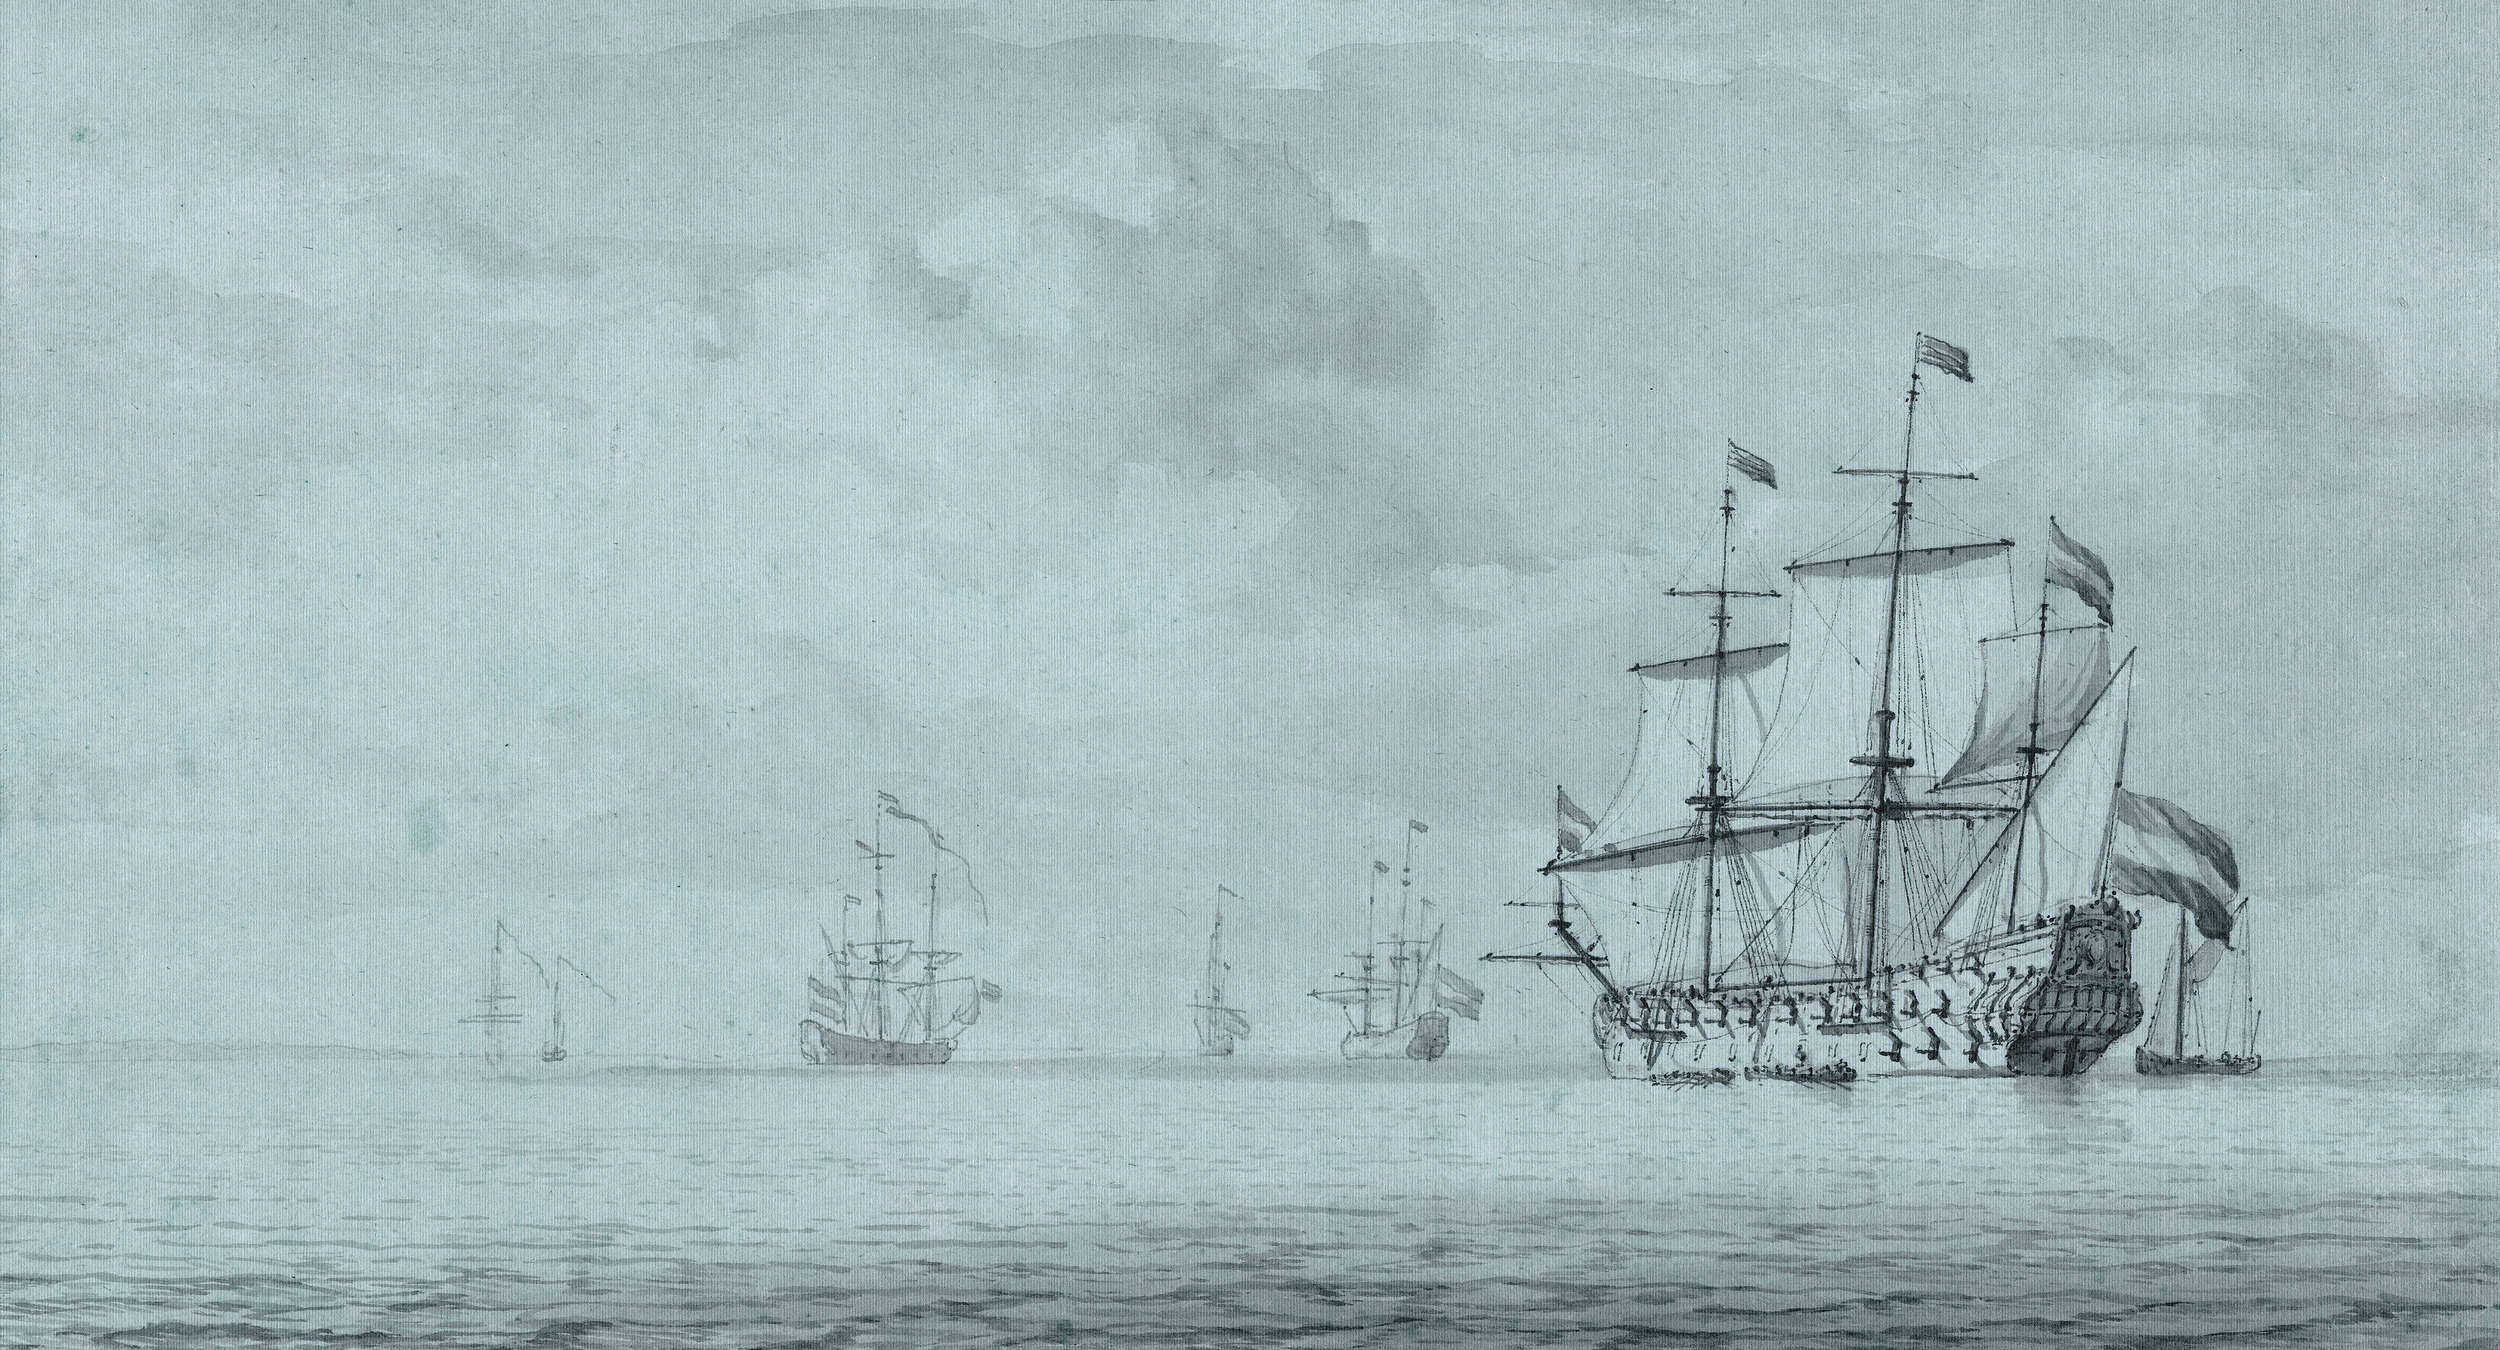             On the Sea 1 – Graublaue Fototapete Schiffe Vintage Gemälde Stil
        